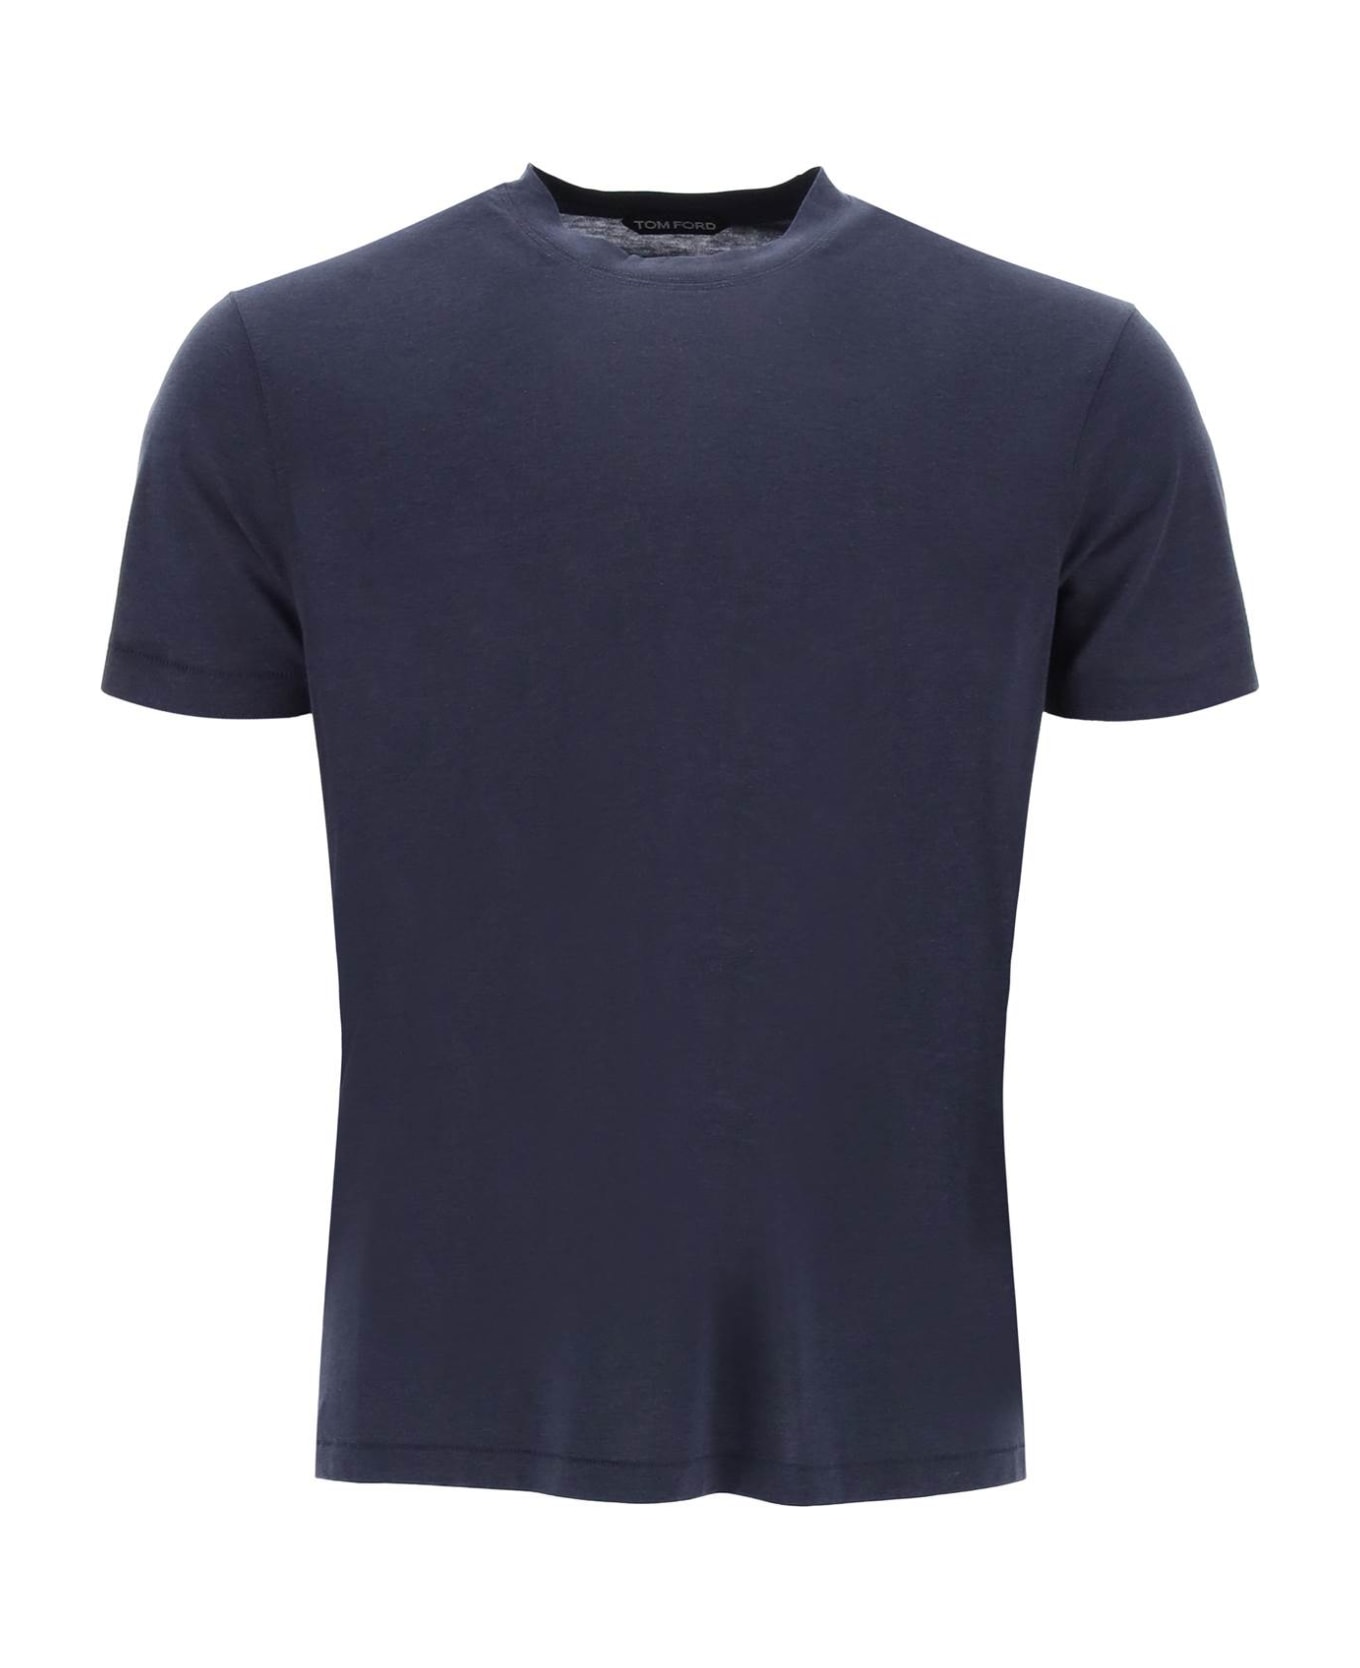 Tom Ford Strech T-shirt - Blue